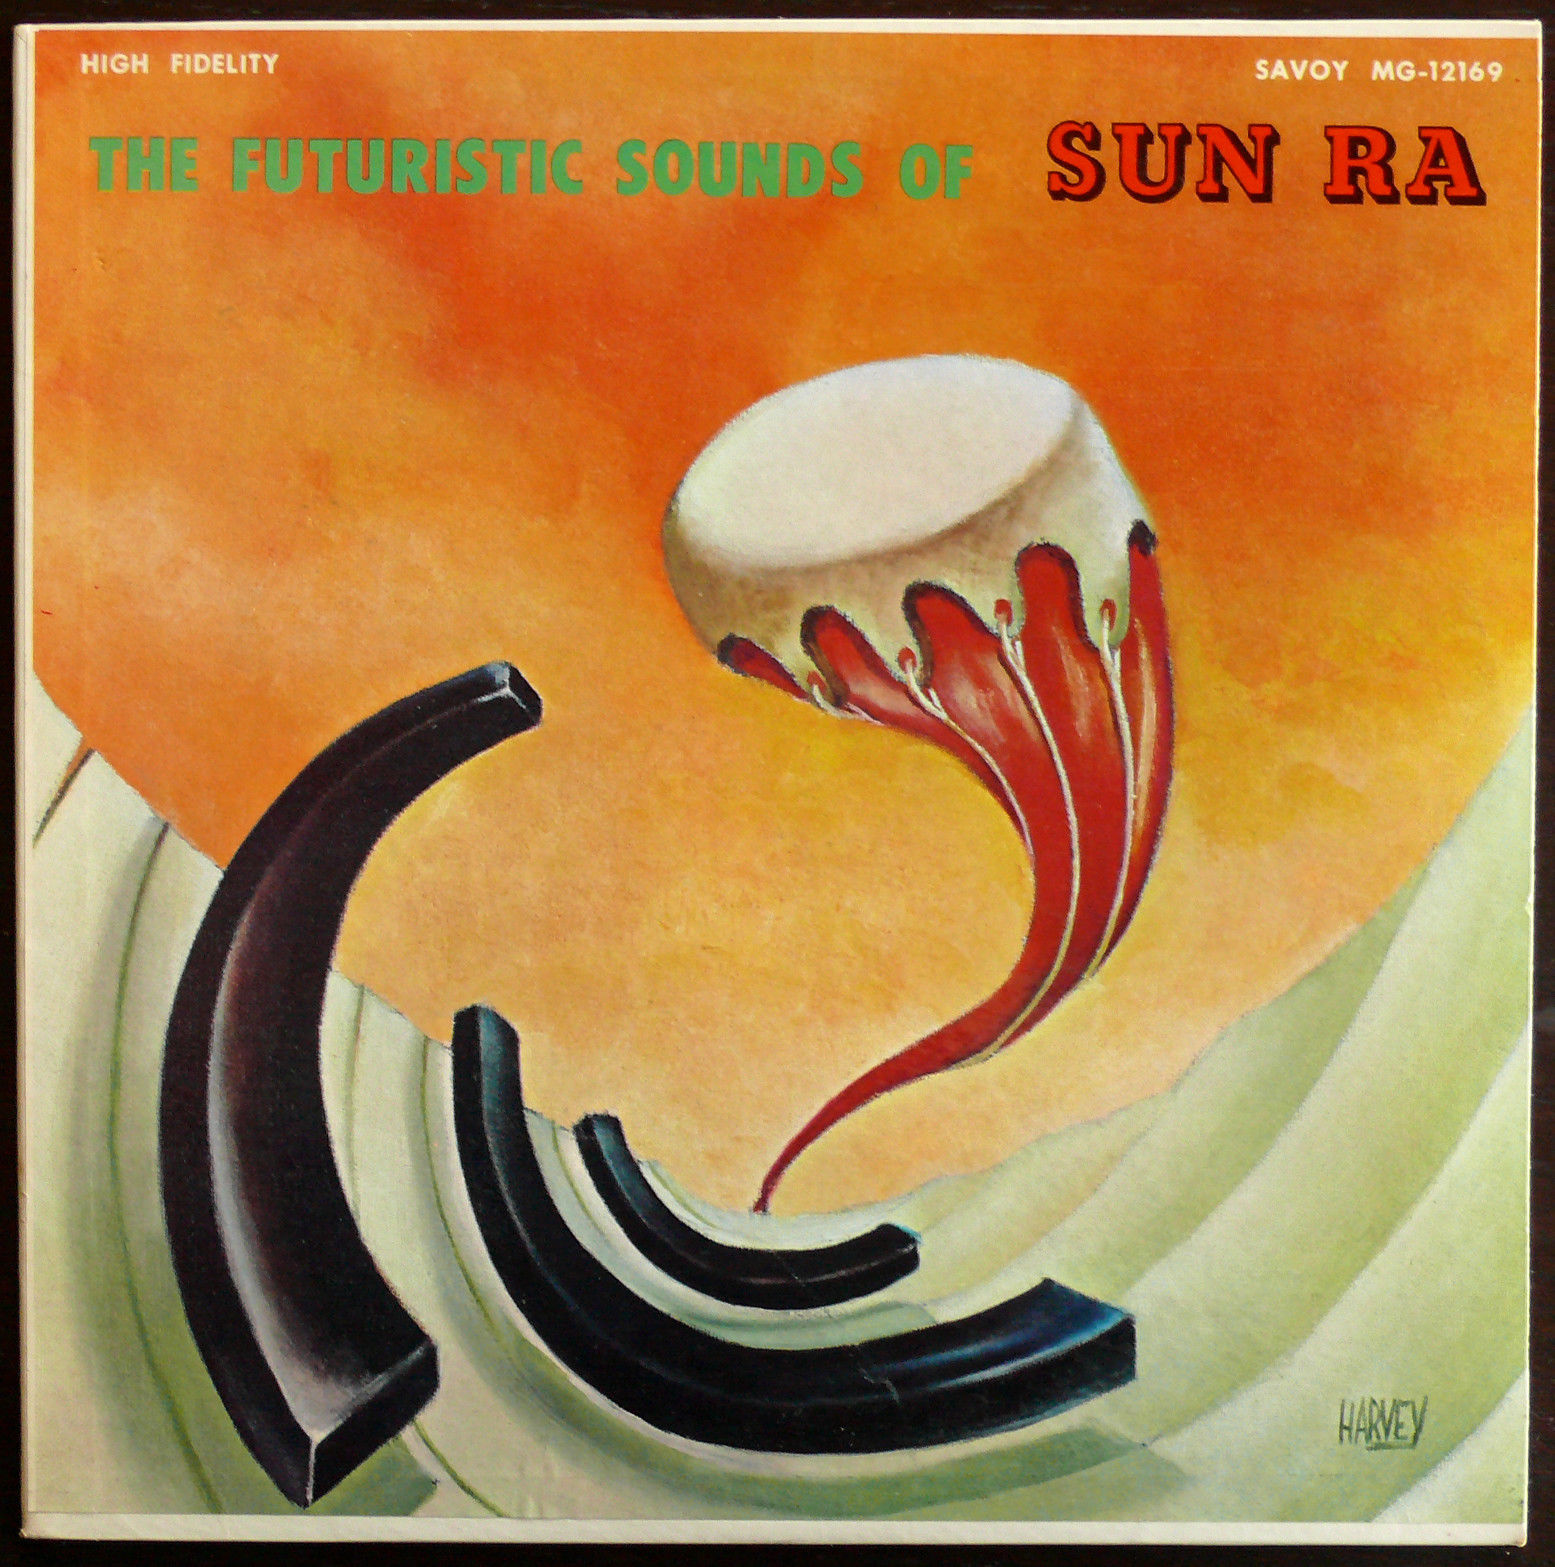 #Sun Ra- The futuristic sounds of Sun Ra SAVOY og TOP copy immaculate LISTEN#